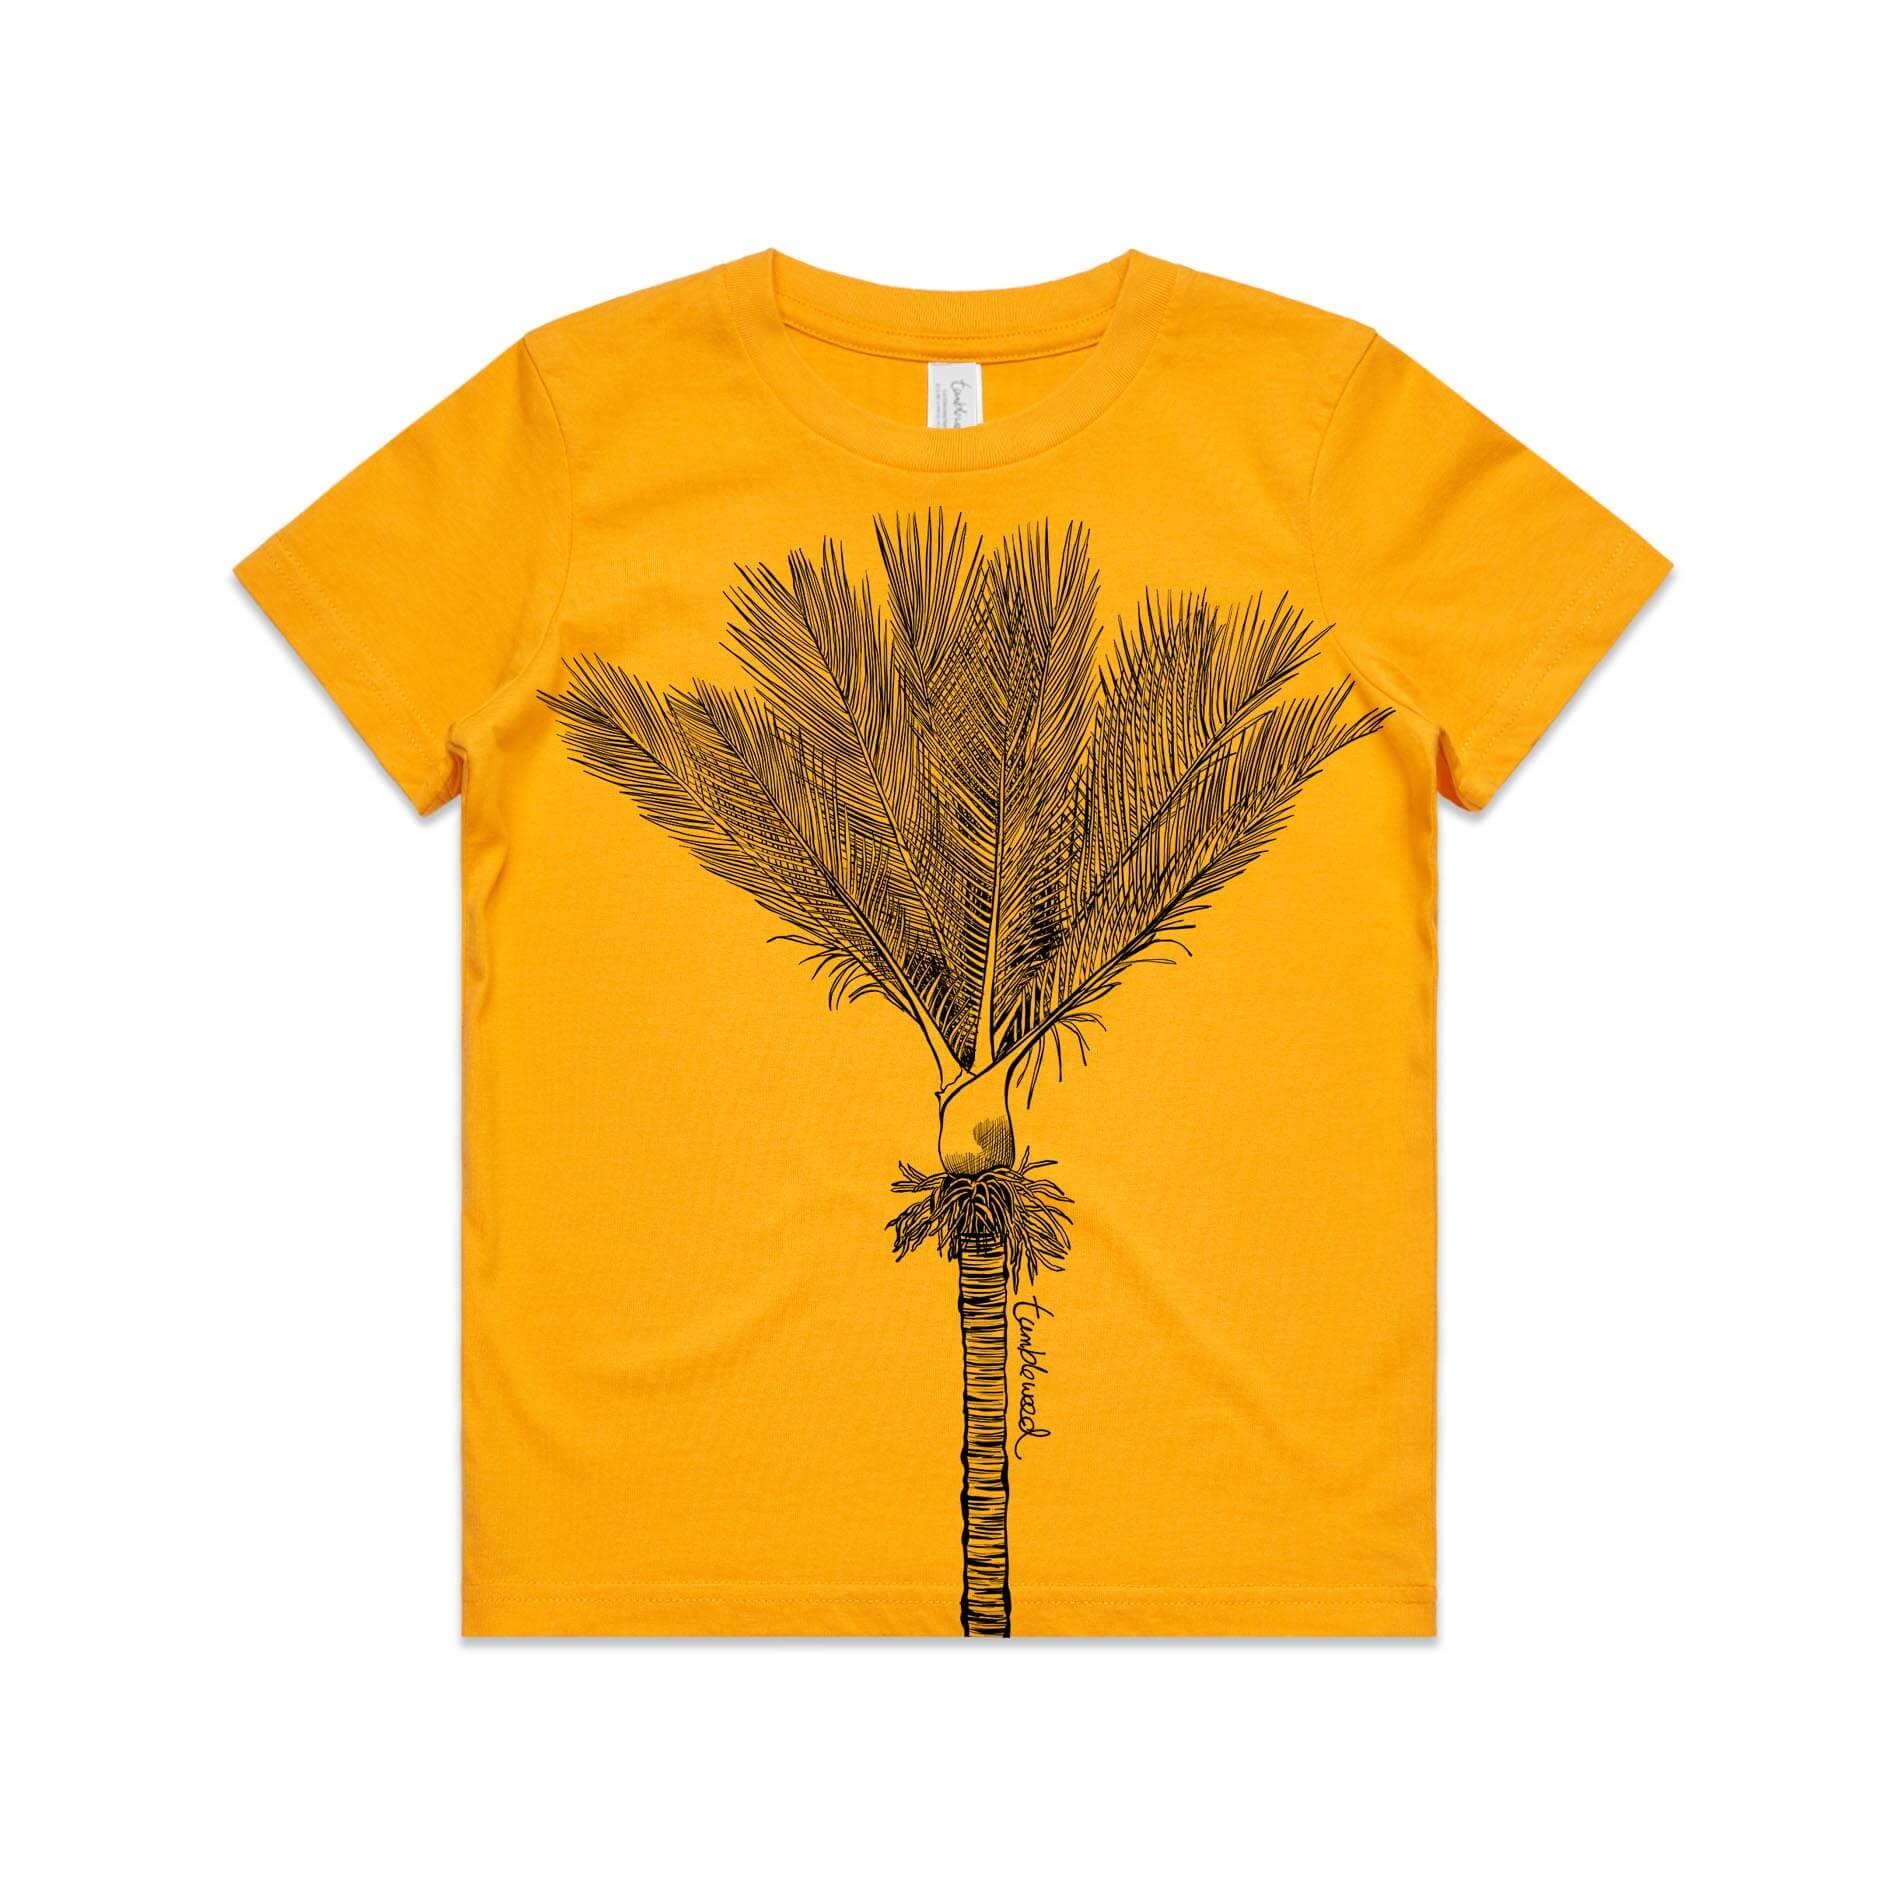 Gold, cotton kids' t-shirt with screen printed nīkau design.